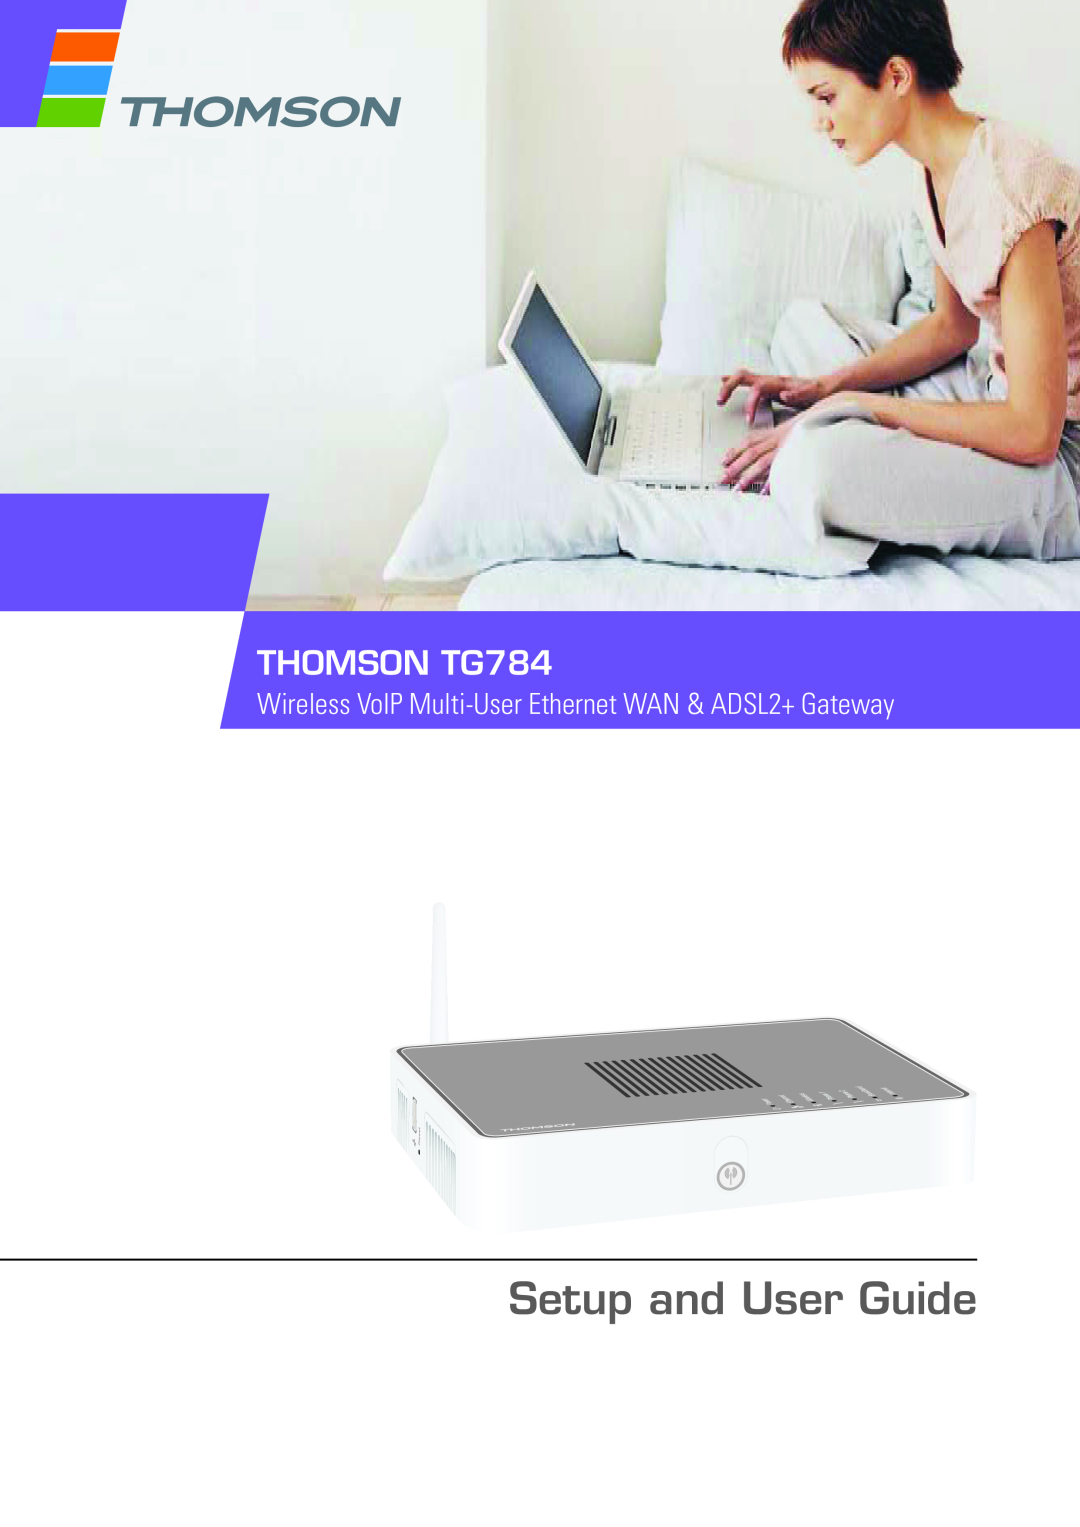 Technicolor - Thomson manual Setup and User Guide, THOMSON TG784 